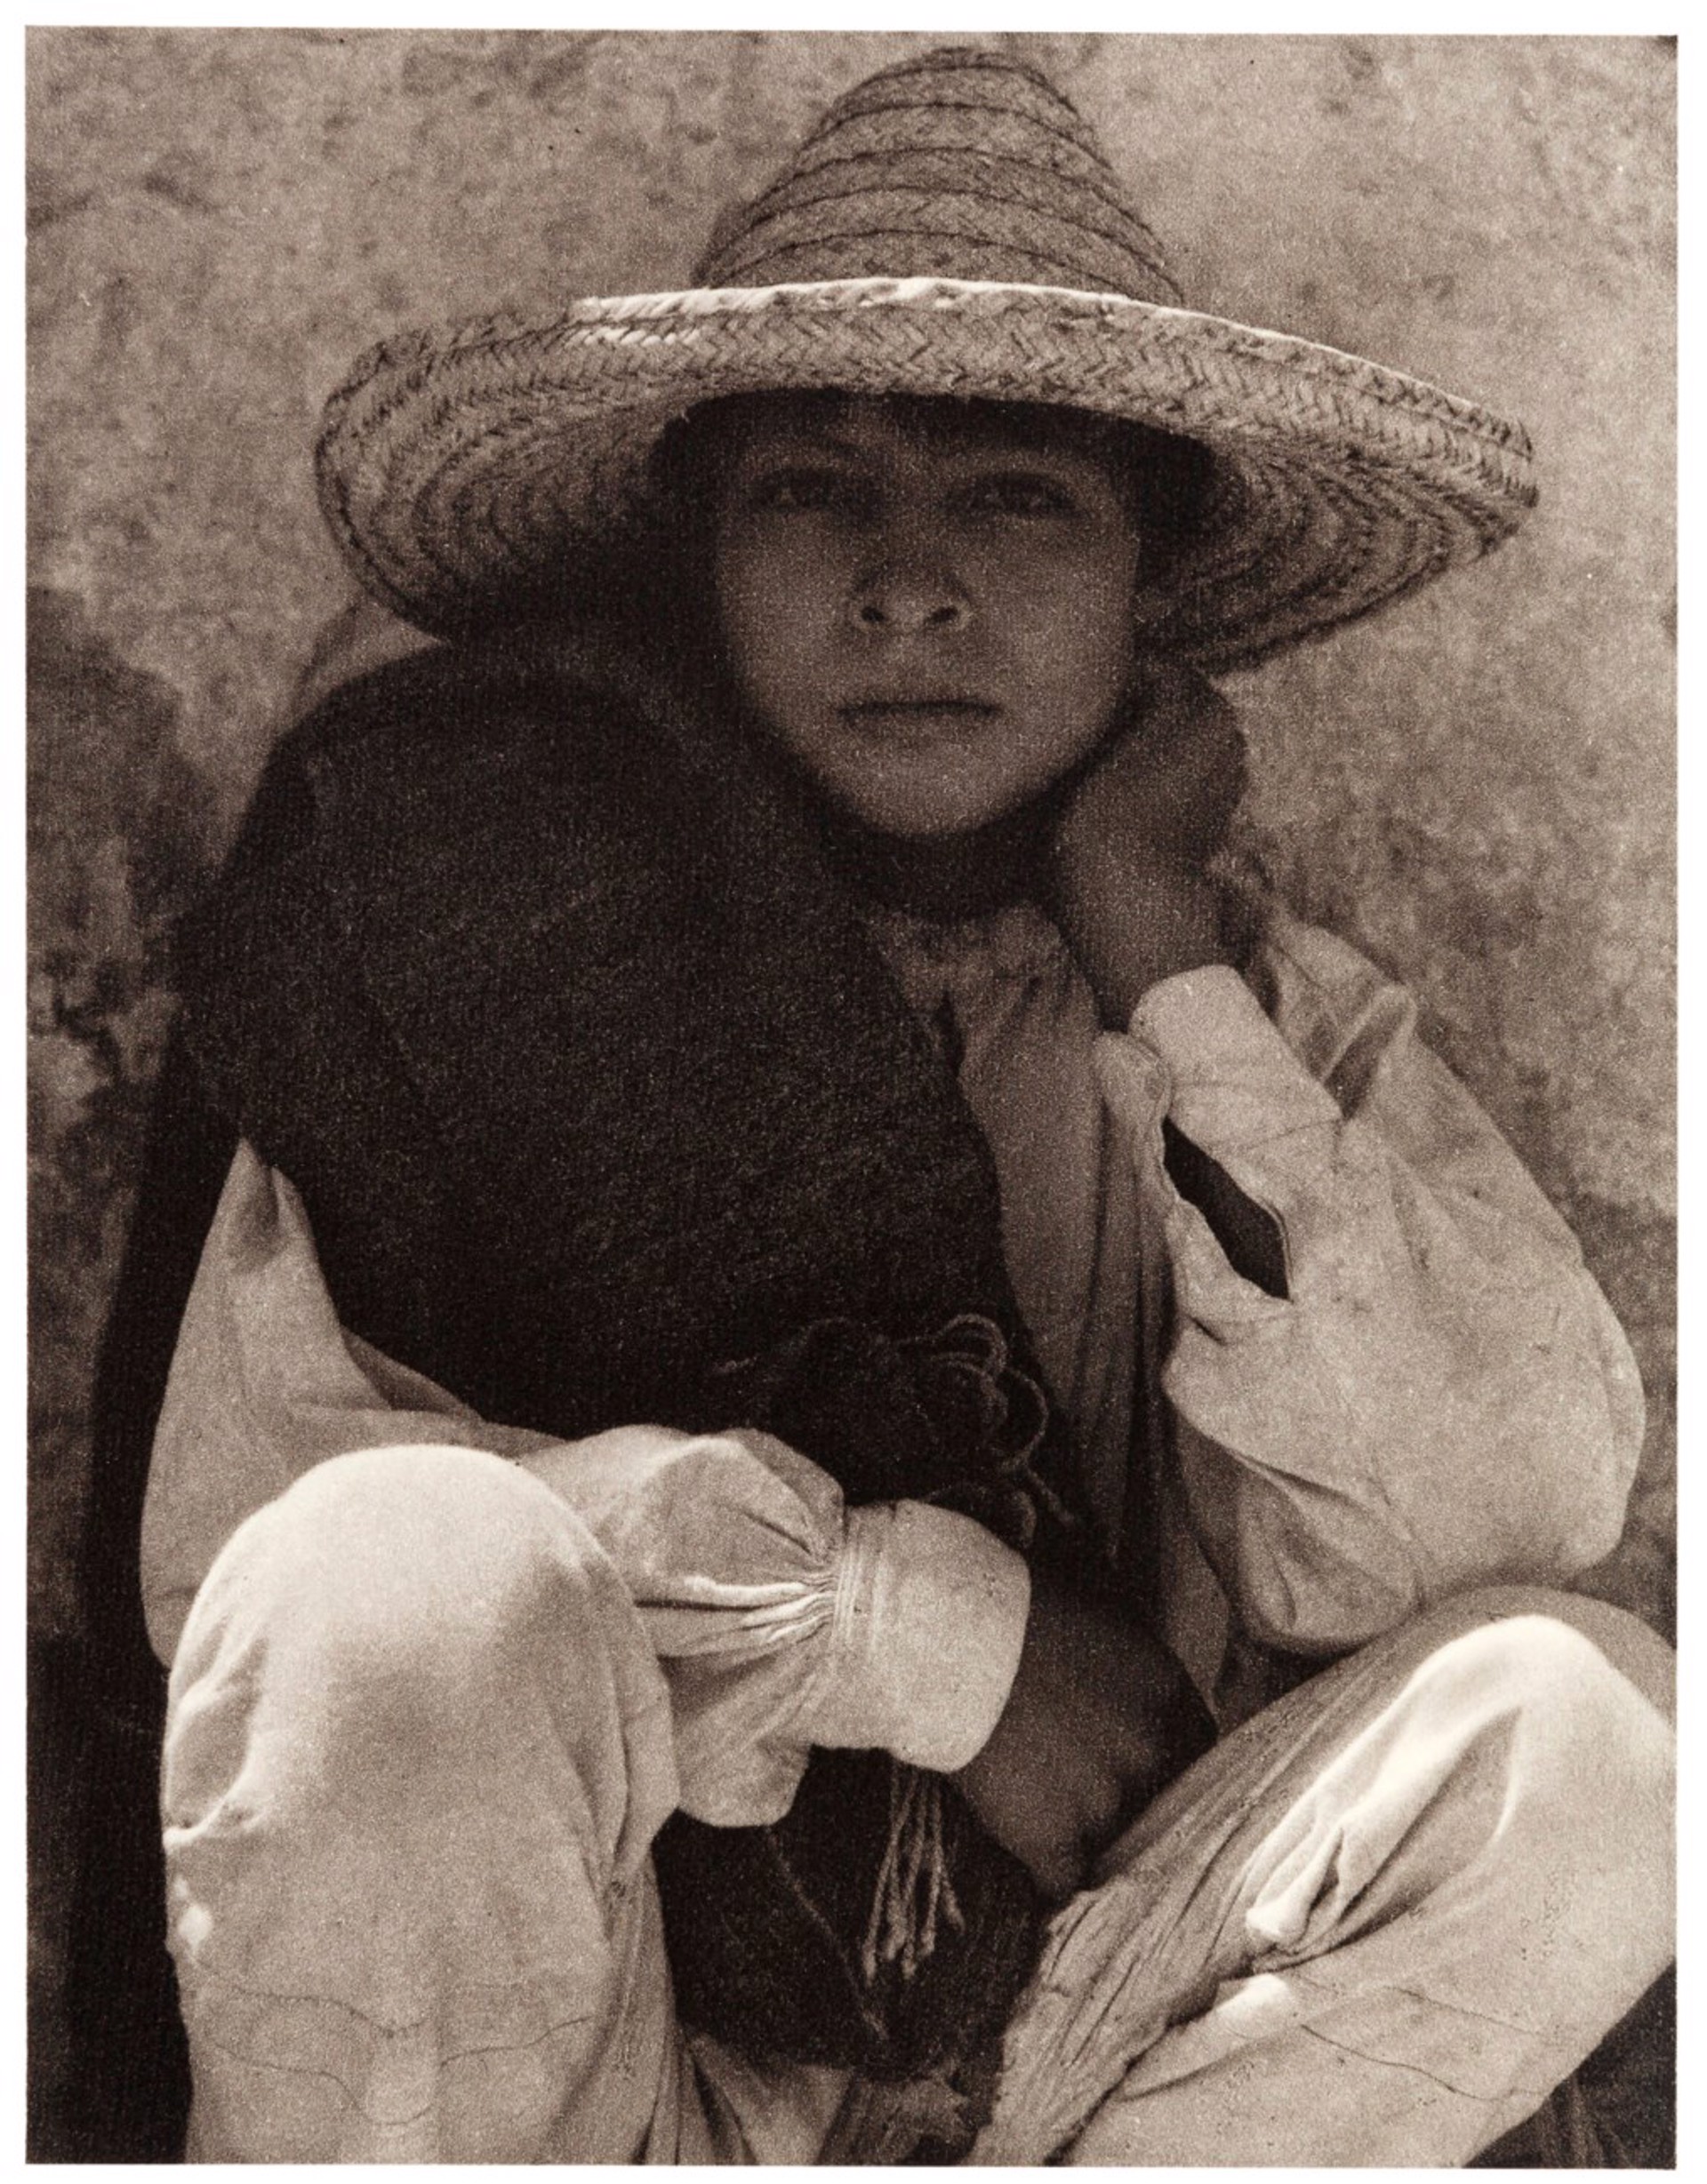 Boy, Hidalgo, Mexico by Paul Strand